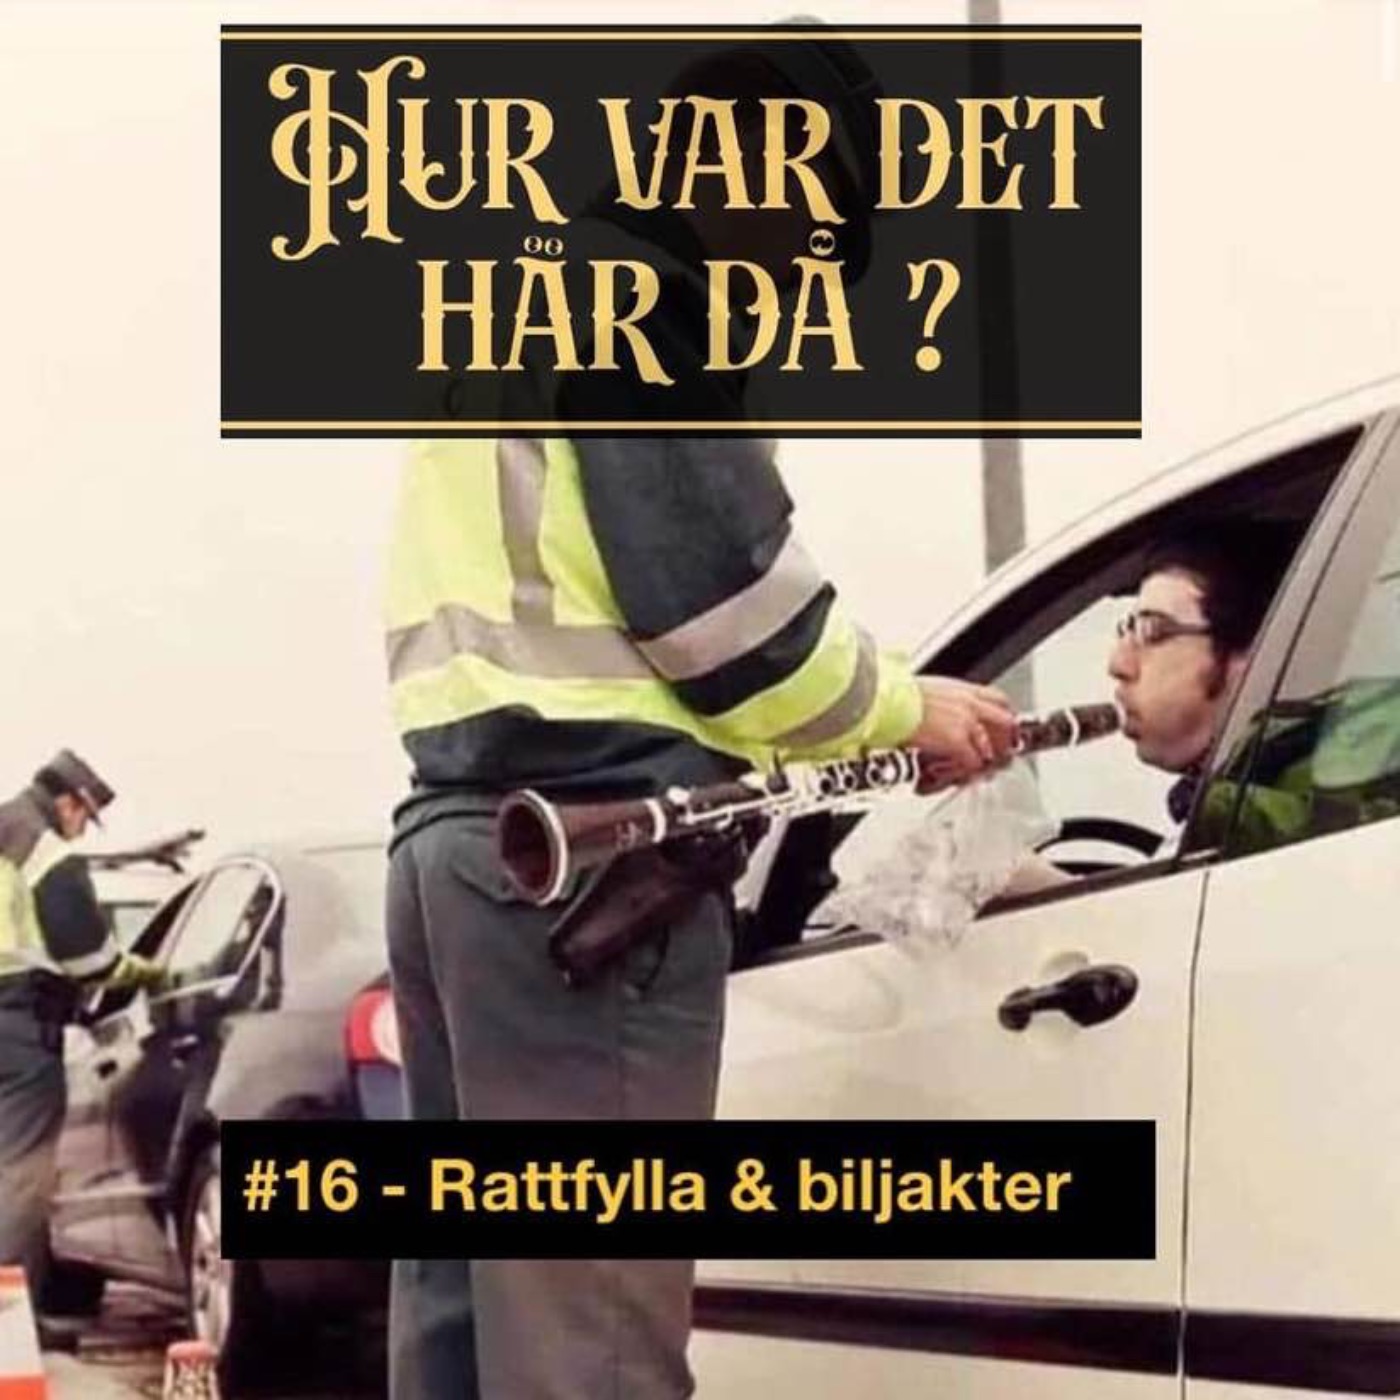 #16 - Rattfylla & biljakter